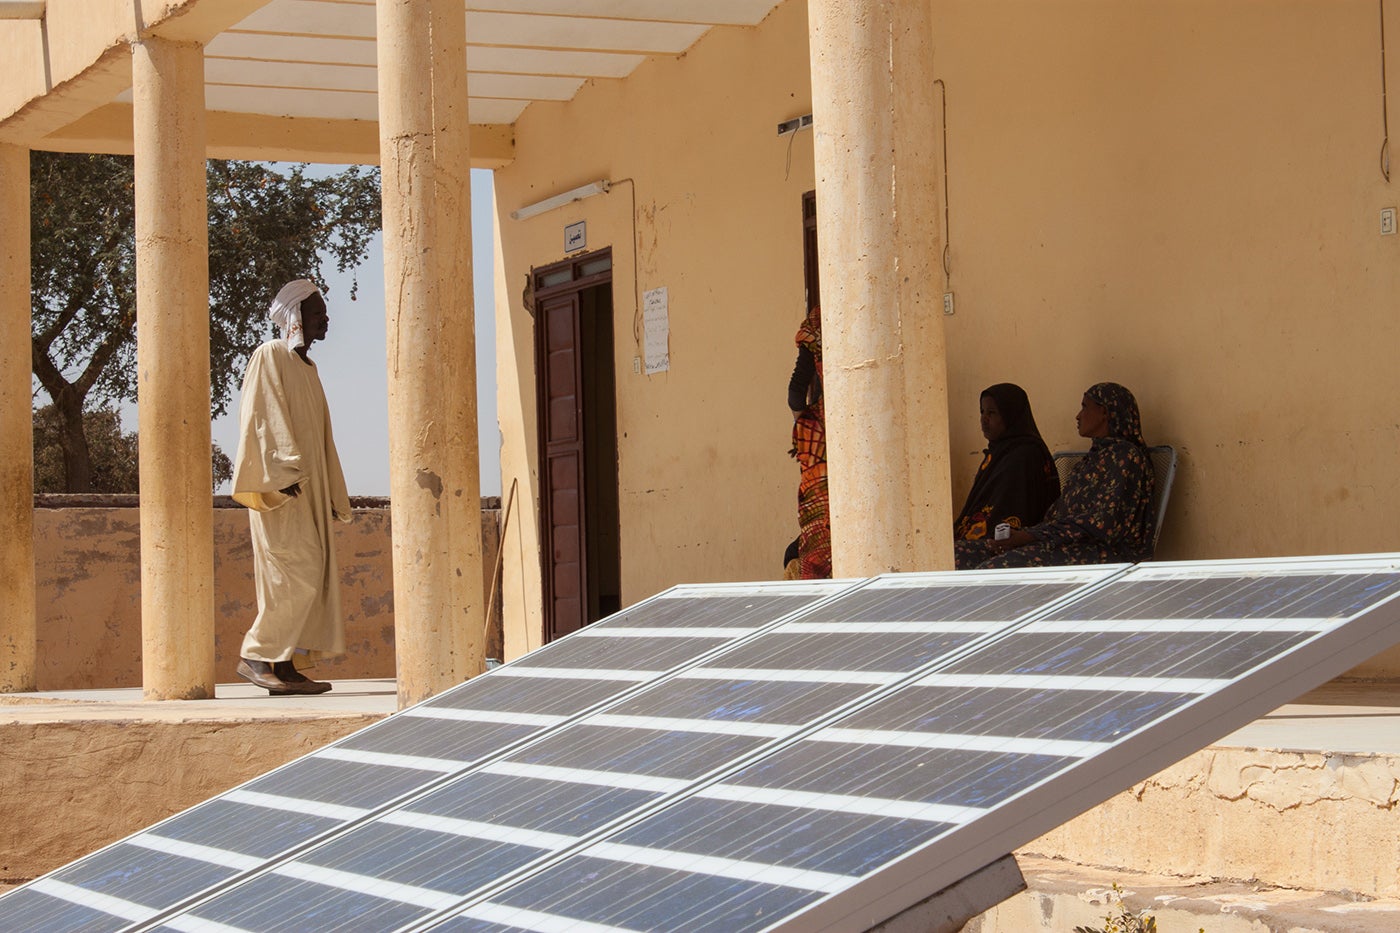 Solar panels at a health center in Sudan